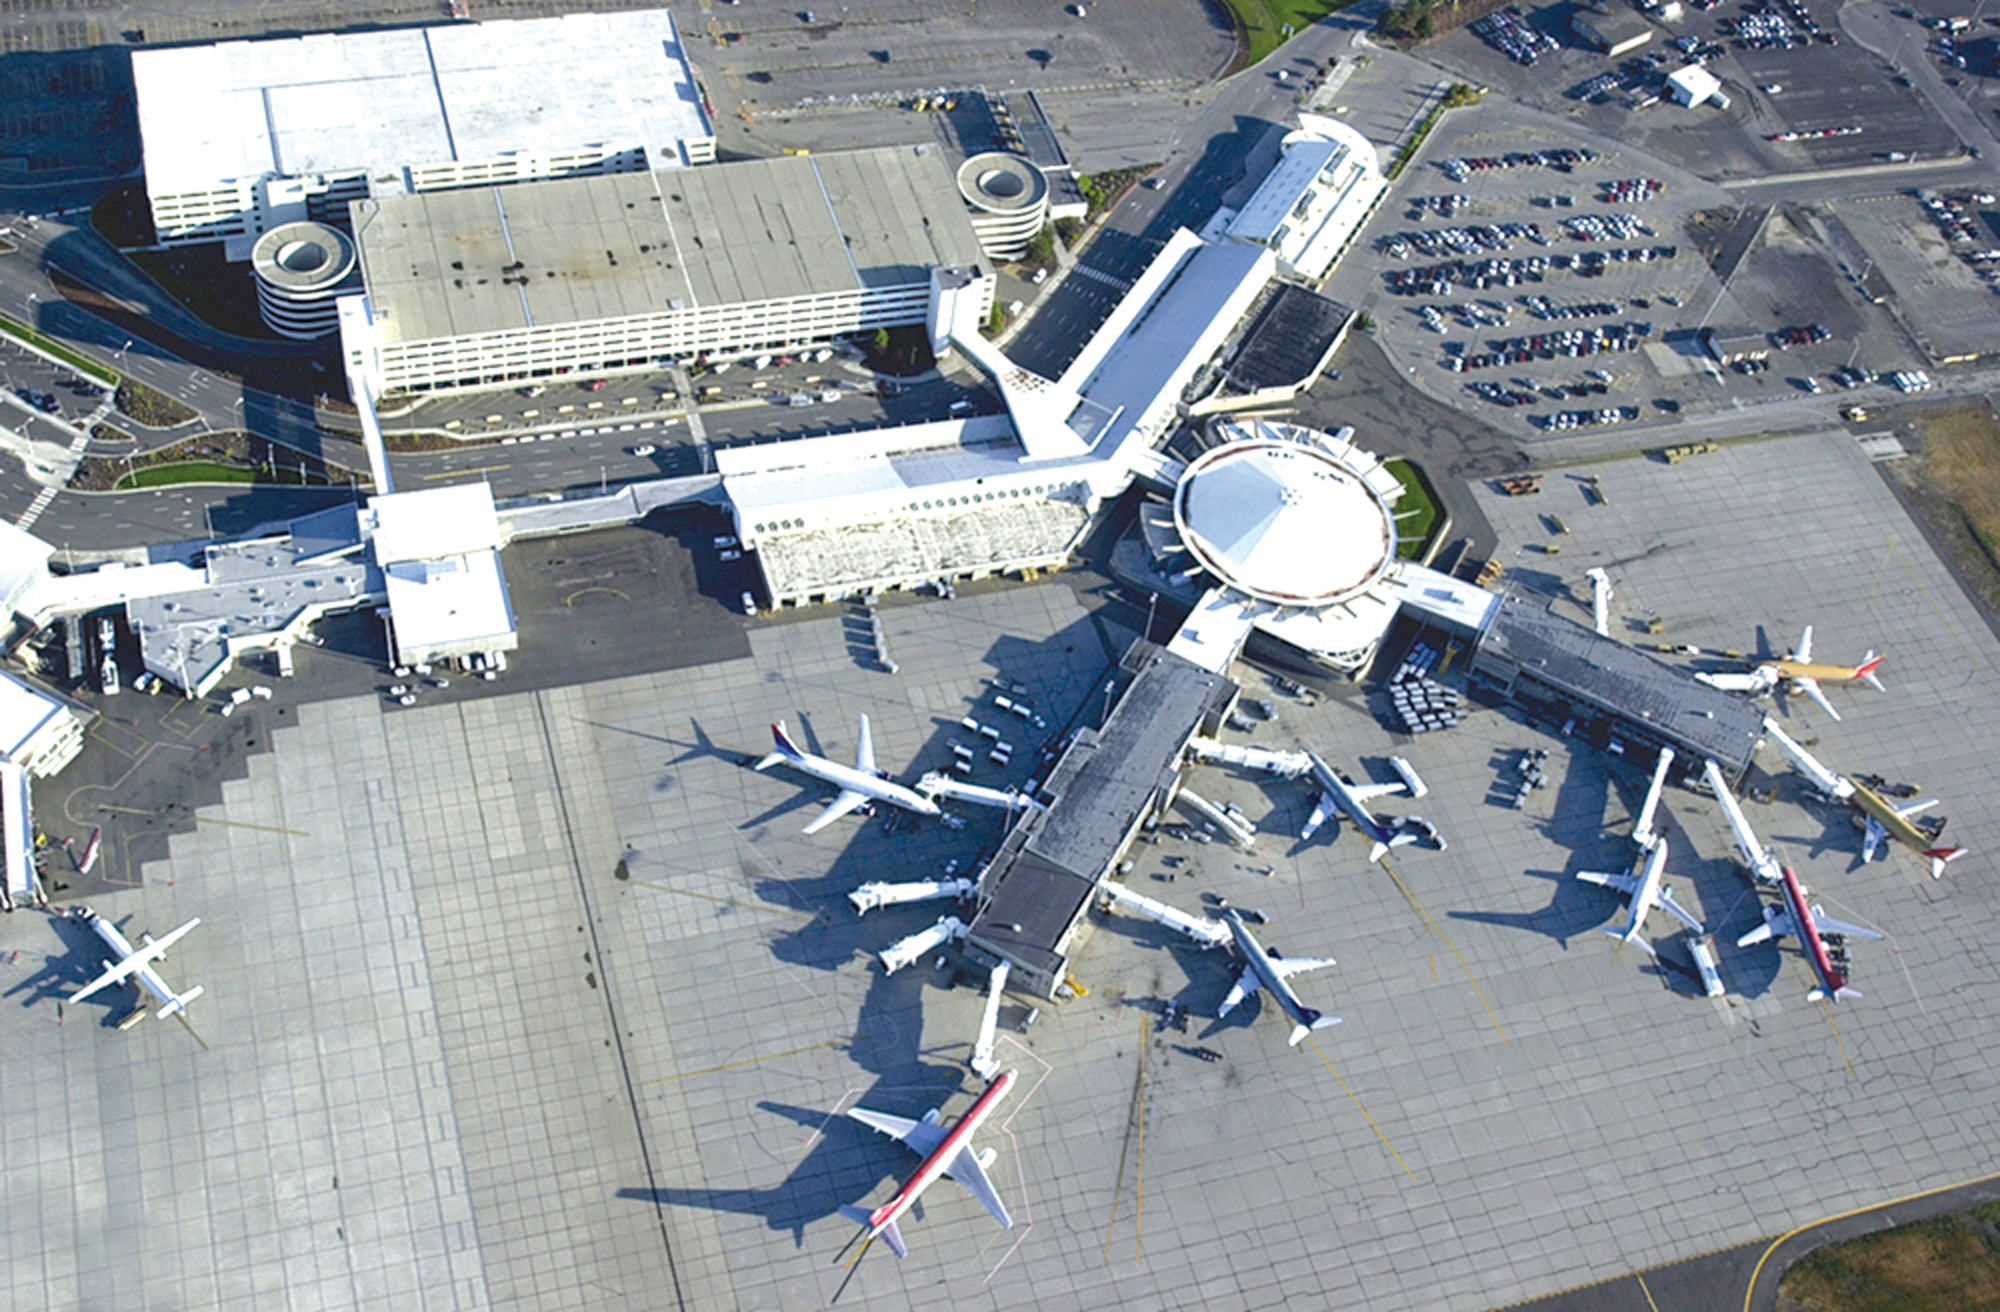 Spokane International Airport Flights, Aerospace Business Park Spur Growth